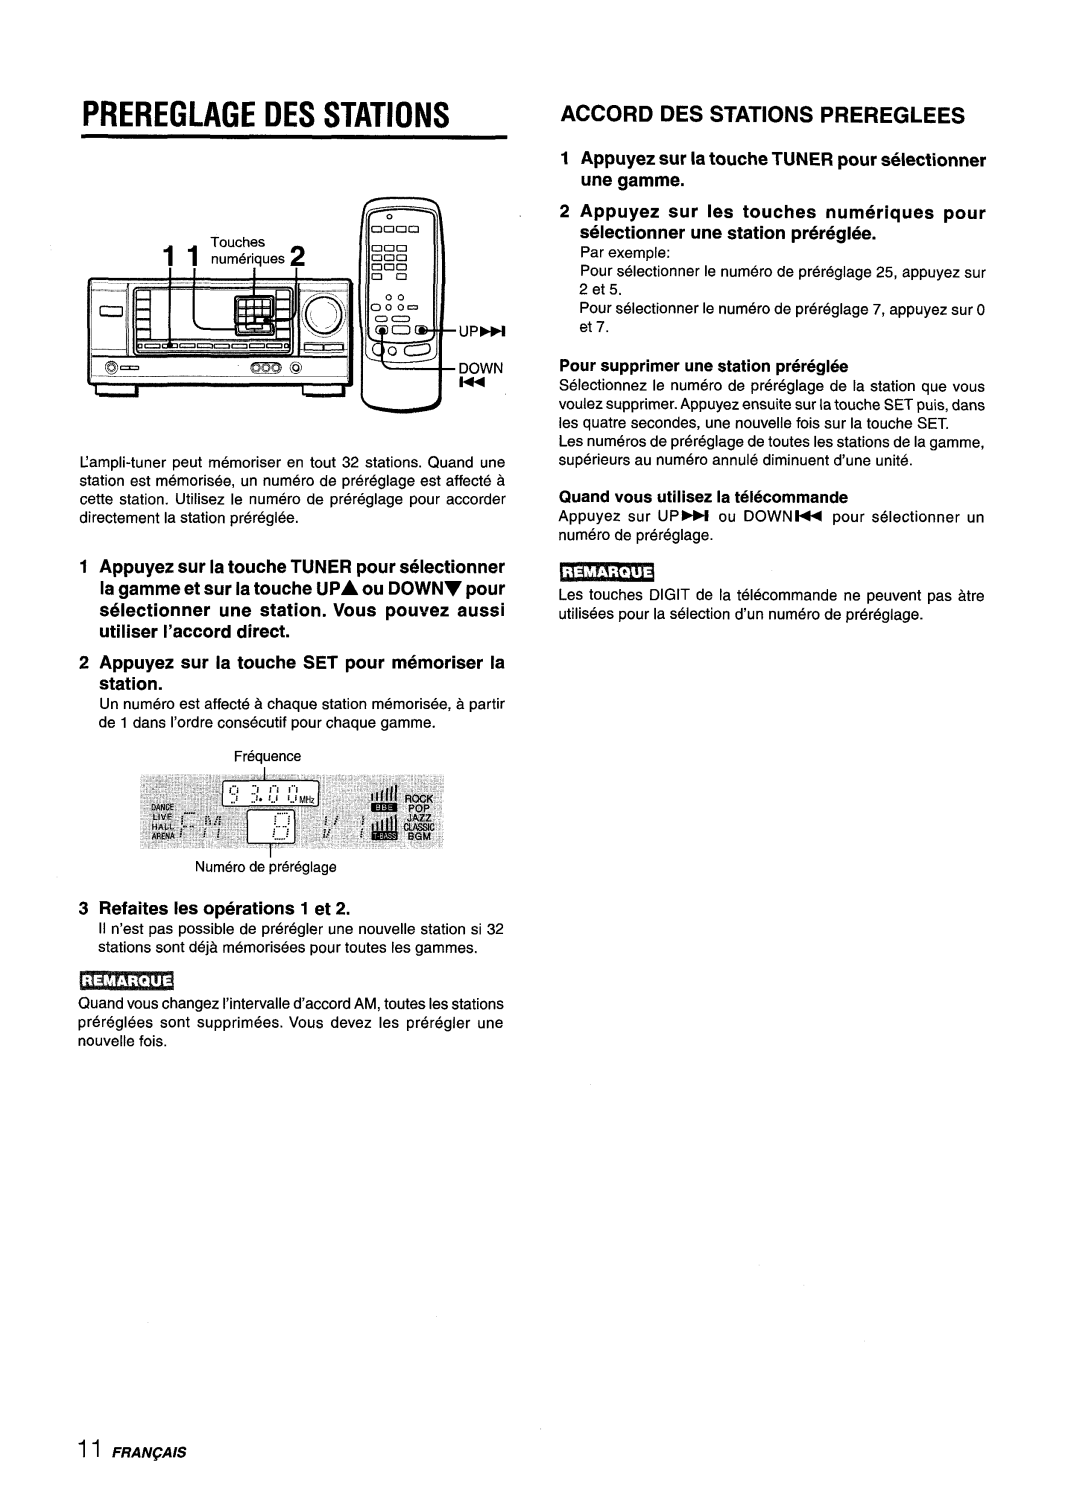 Aiwa AV-X220 manual Prereglage Des Stations, Accord Des Stations Prereglees, Quand vous utilisez la telecommande, ii5EFi12 